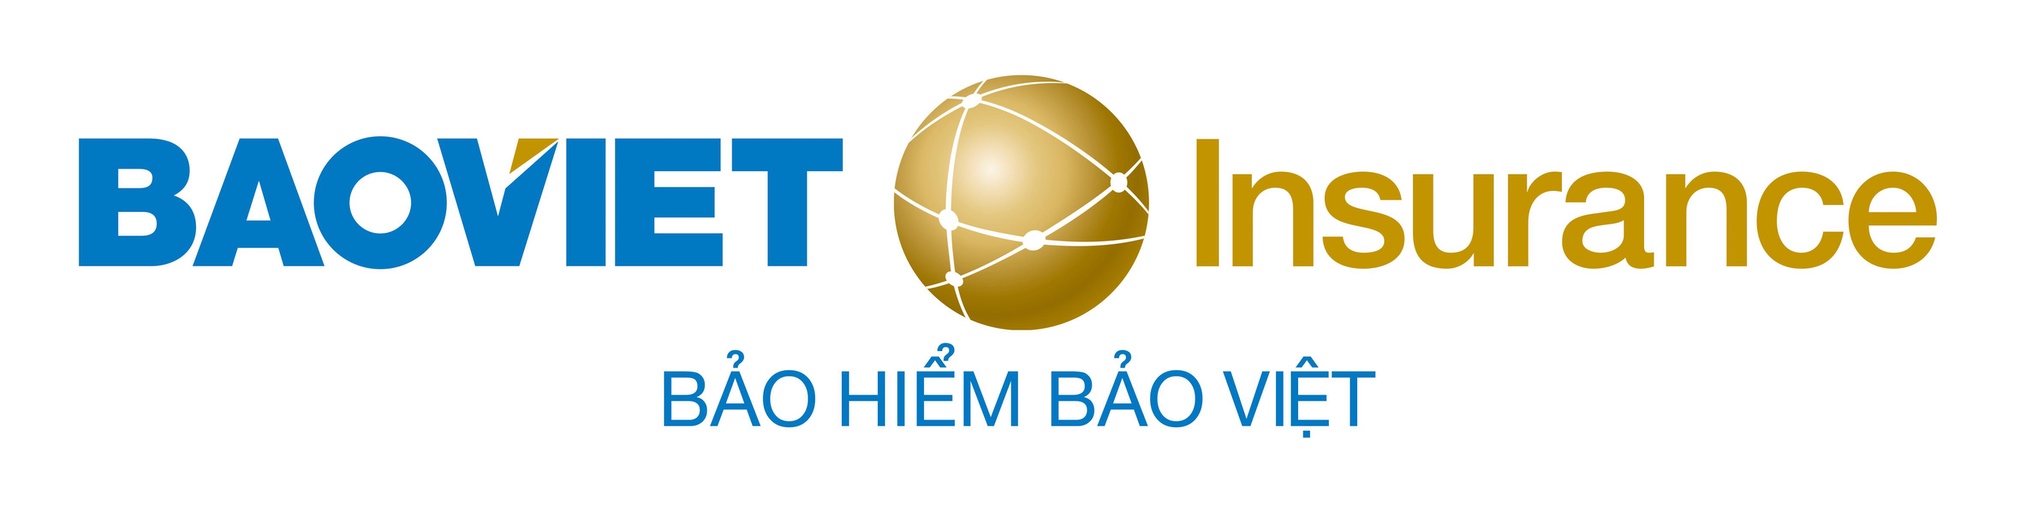 BAOVIET Insurance Logo.